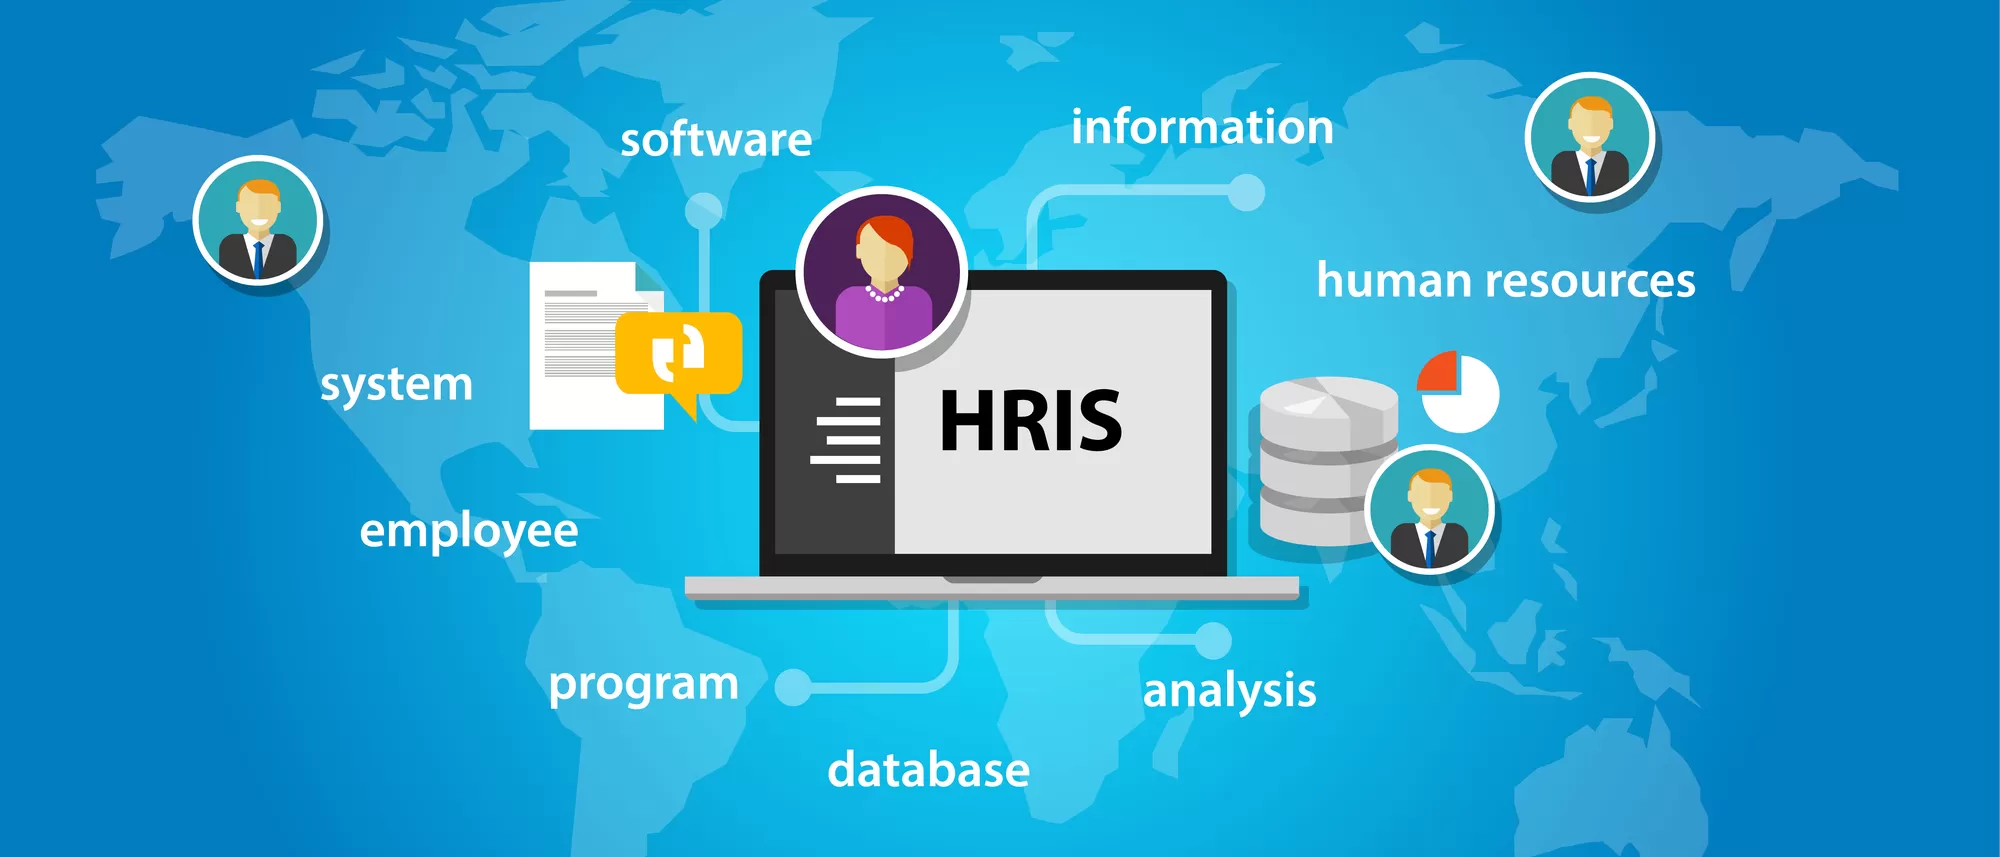 HRIS Human Resources Information System